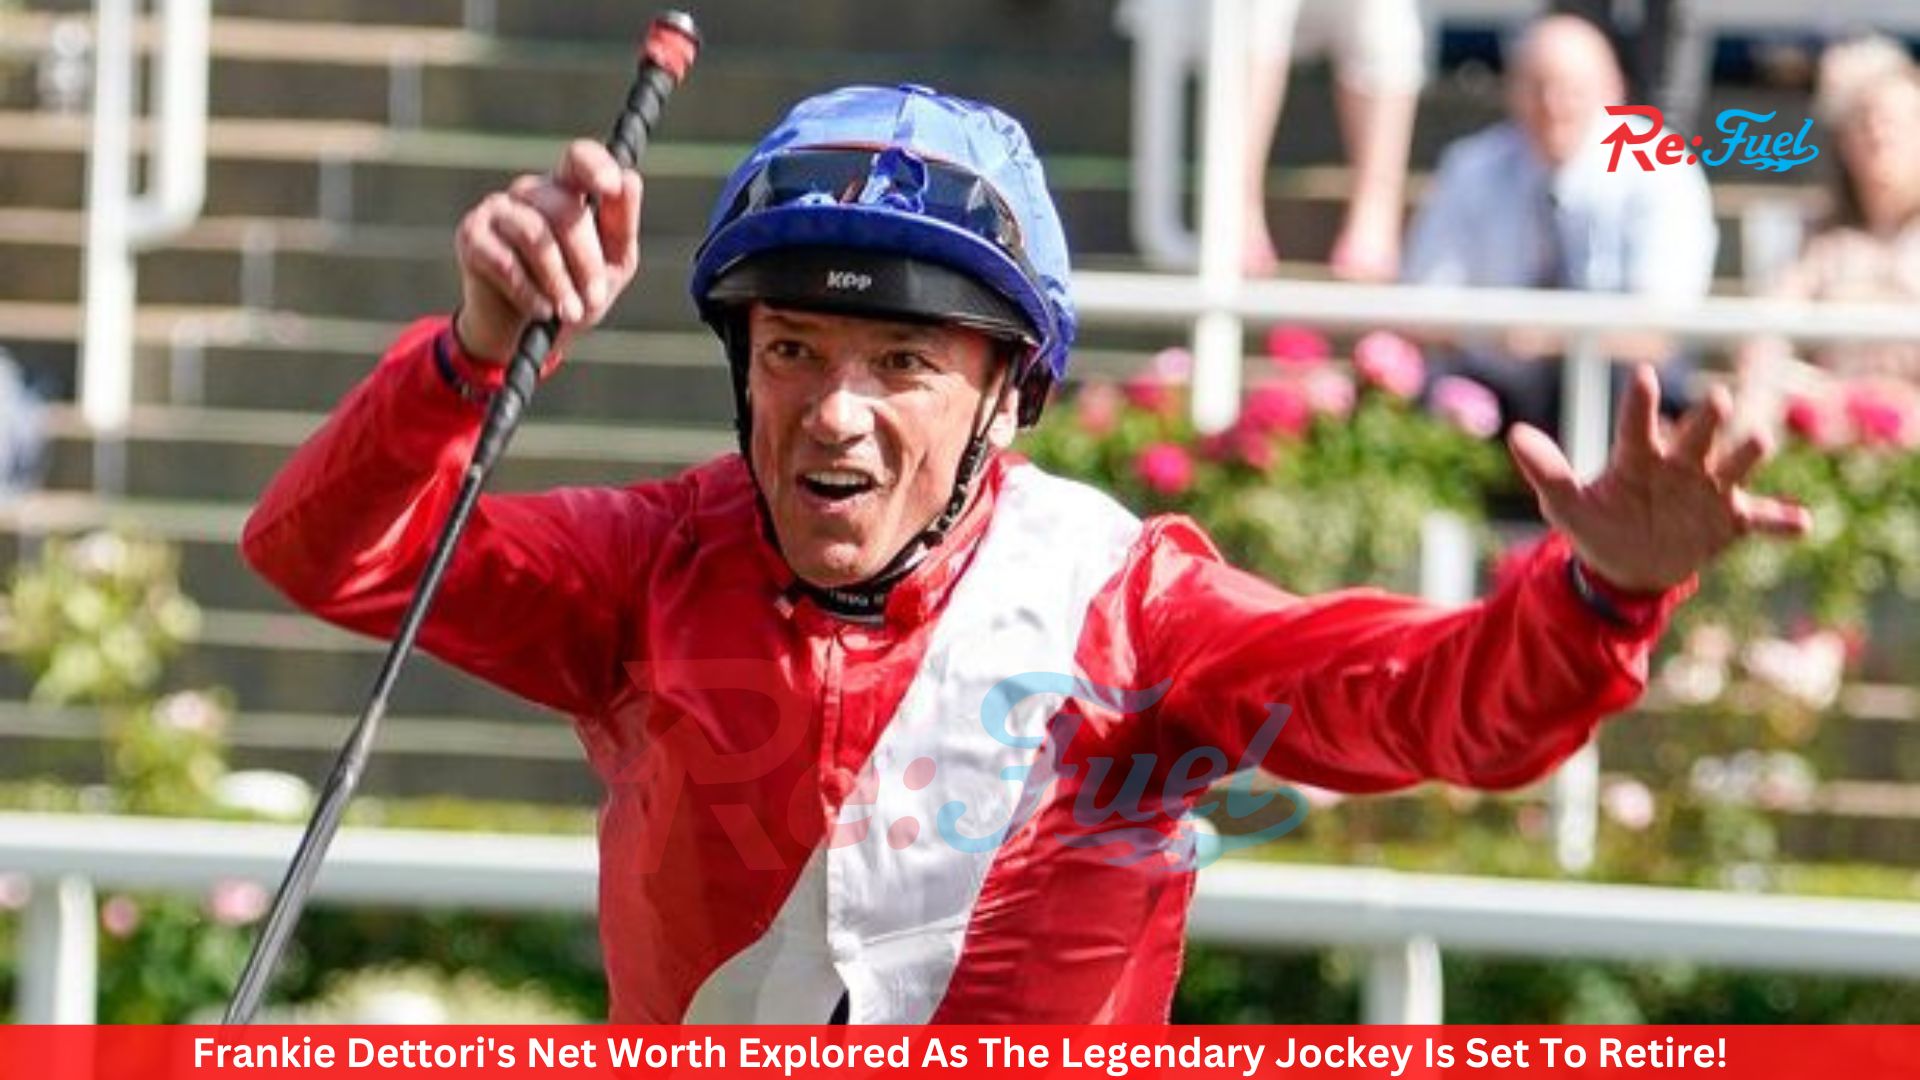 Frankie Dettori's Net Worth Explored As The Legendary Jockey Is Set To Retire!